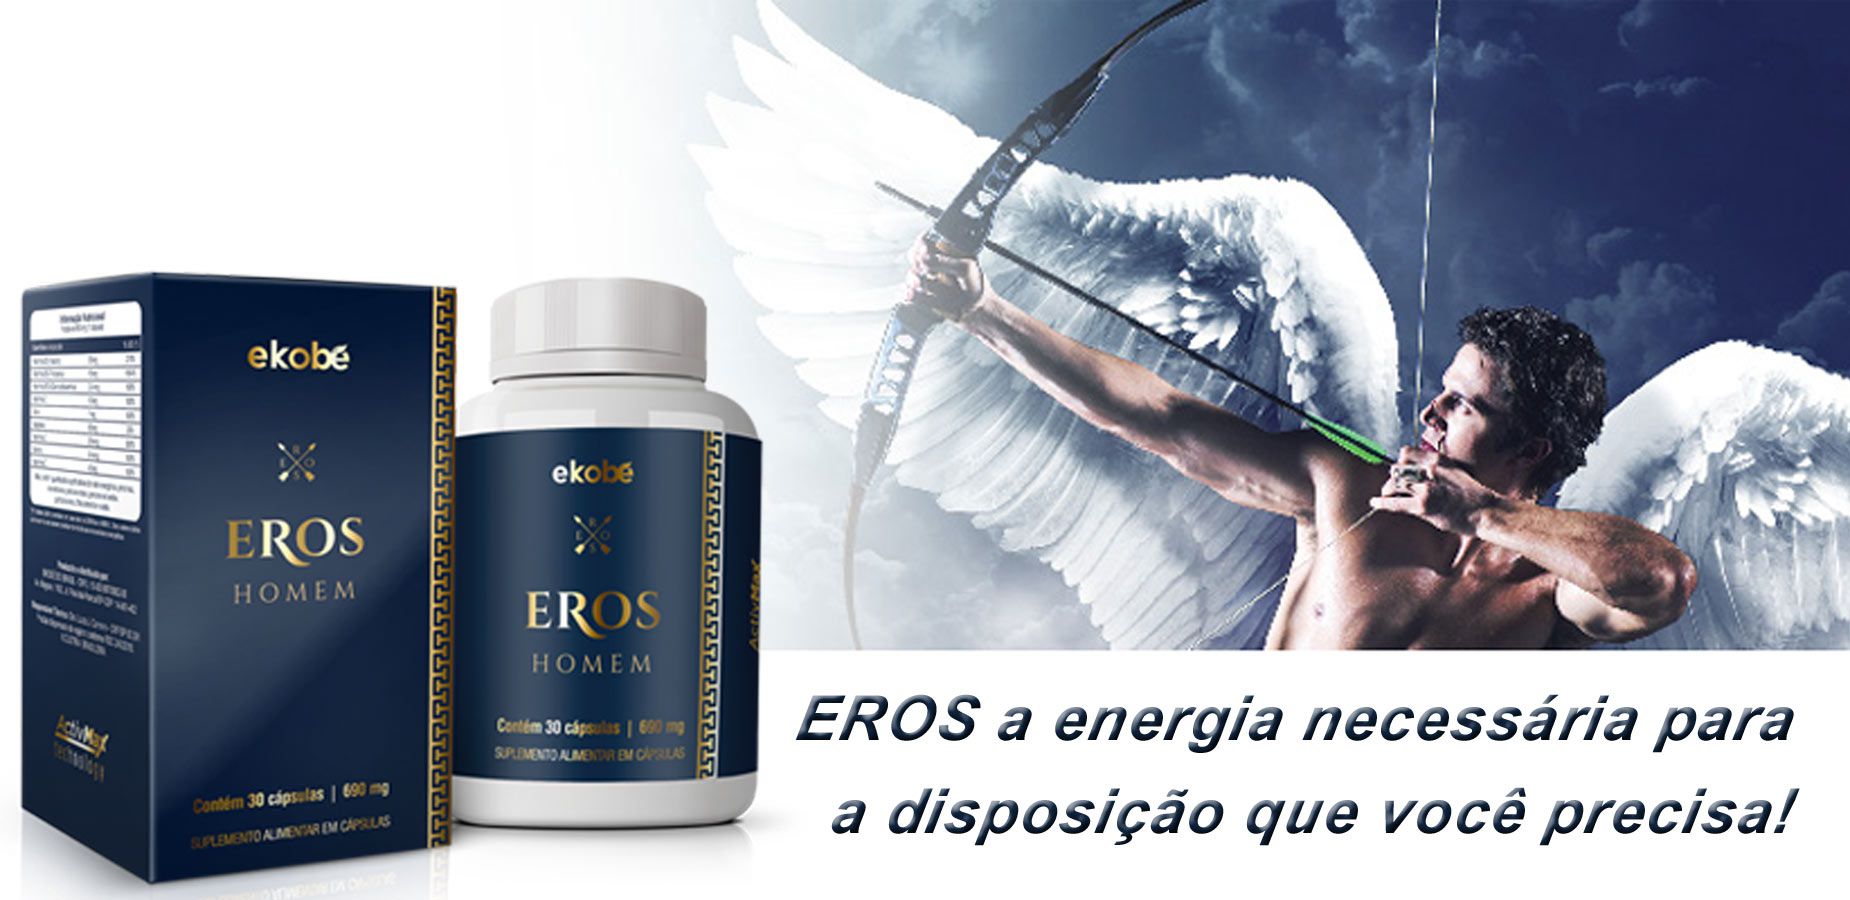 Estimulante Eros Homem 04 Unidades - Loja Saúde - Testes Para COVID-19 e Drogas, Máscaras e Suplementos